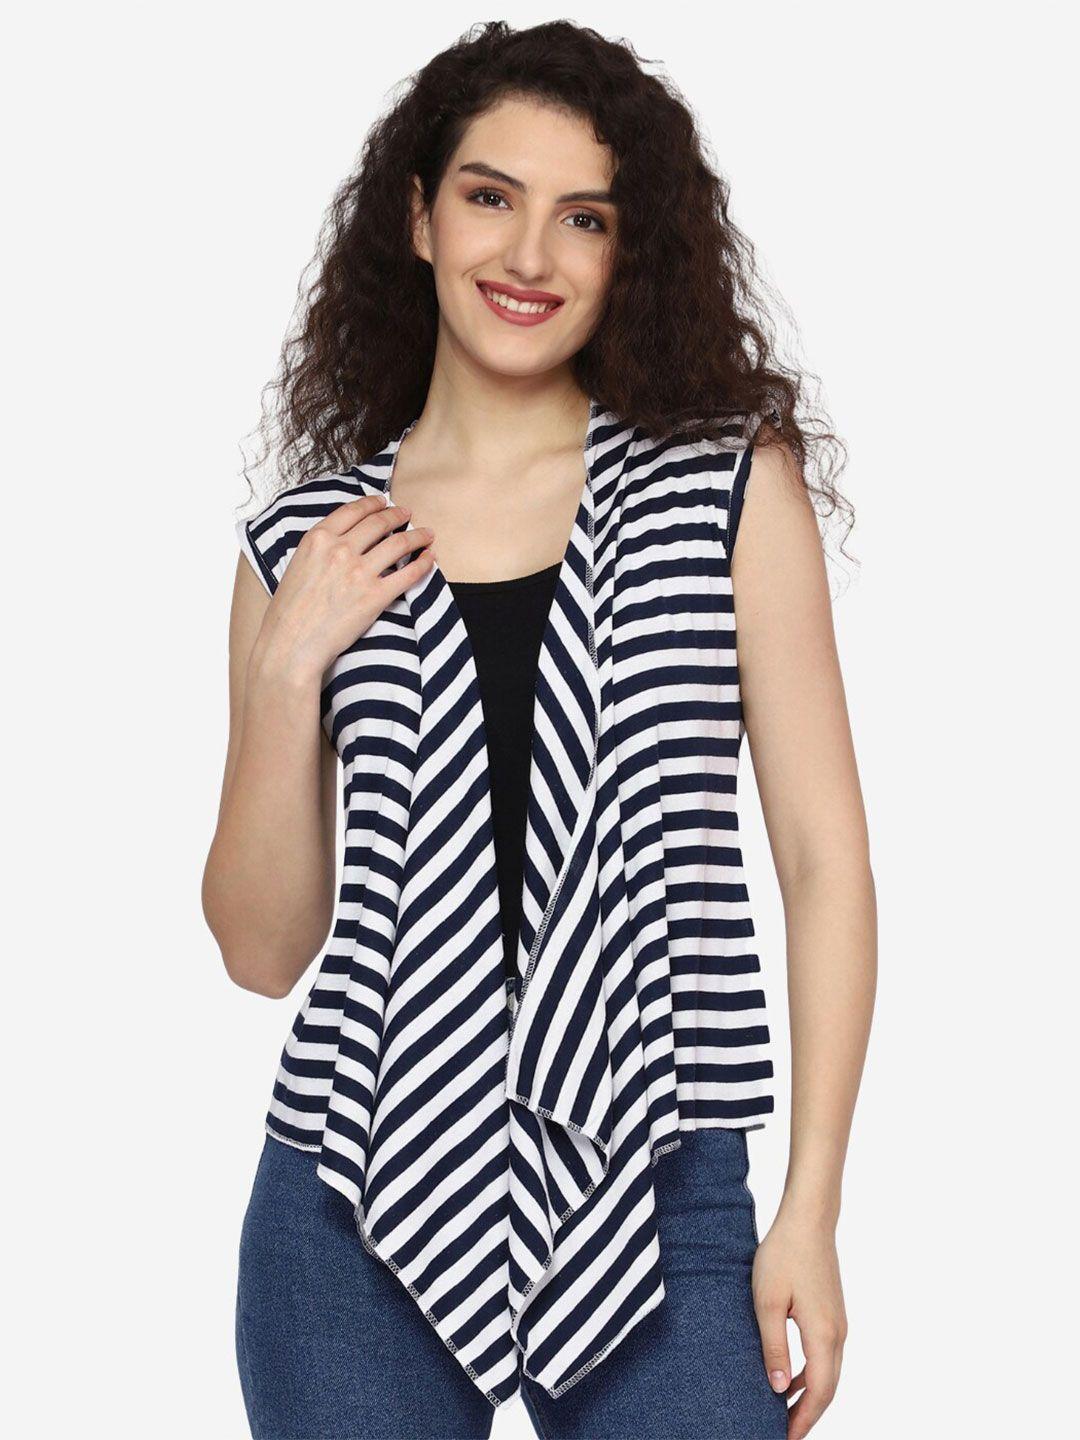 teemoods women navy blue & white striped shrug